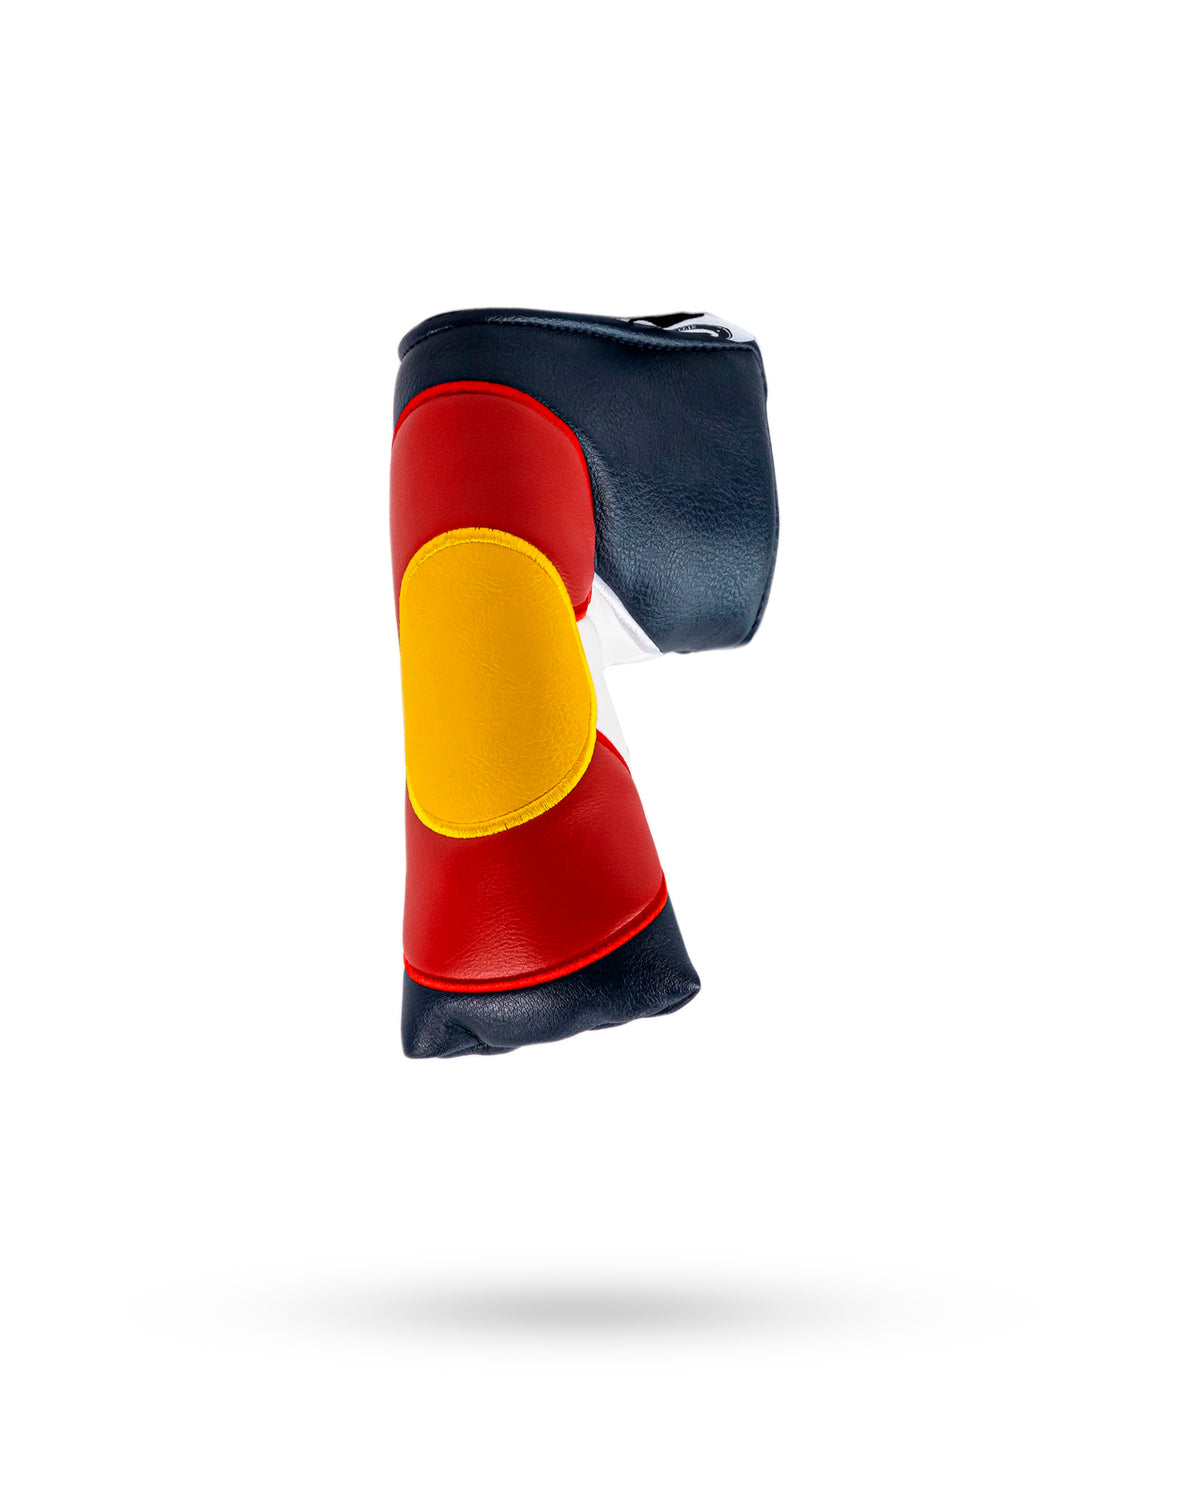 Colorado State Flag - Blade Putter Cover